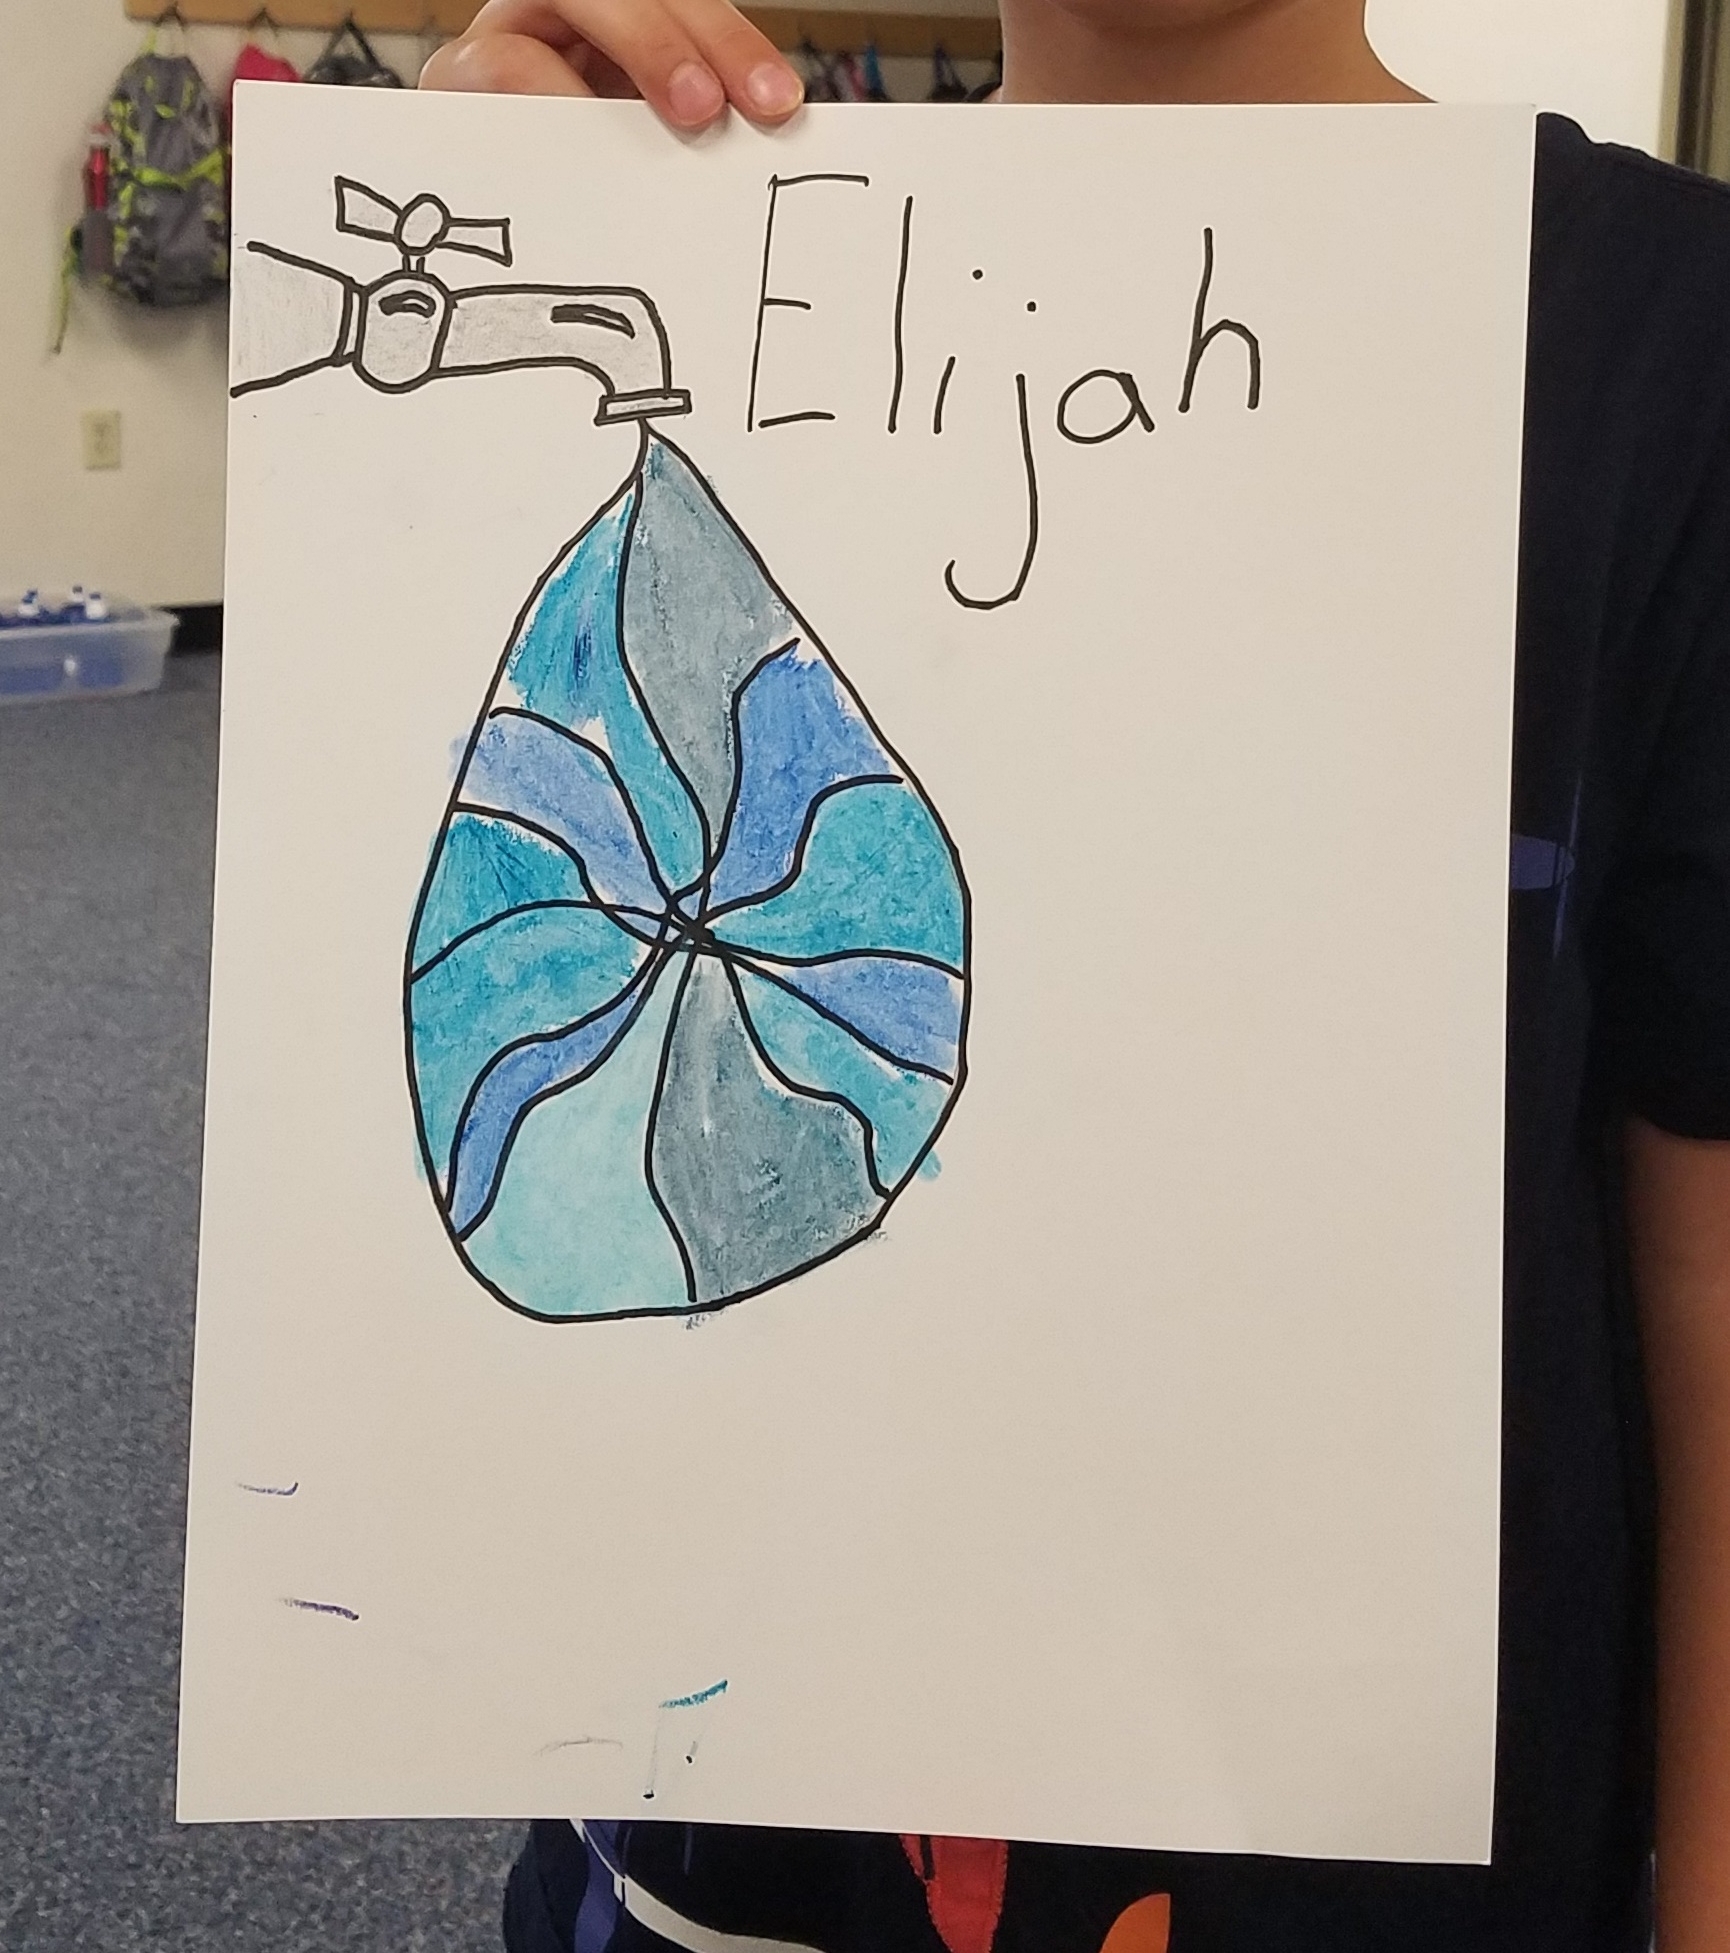 Elijah.jpg